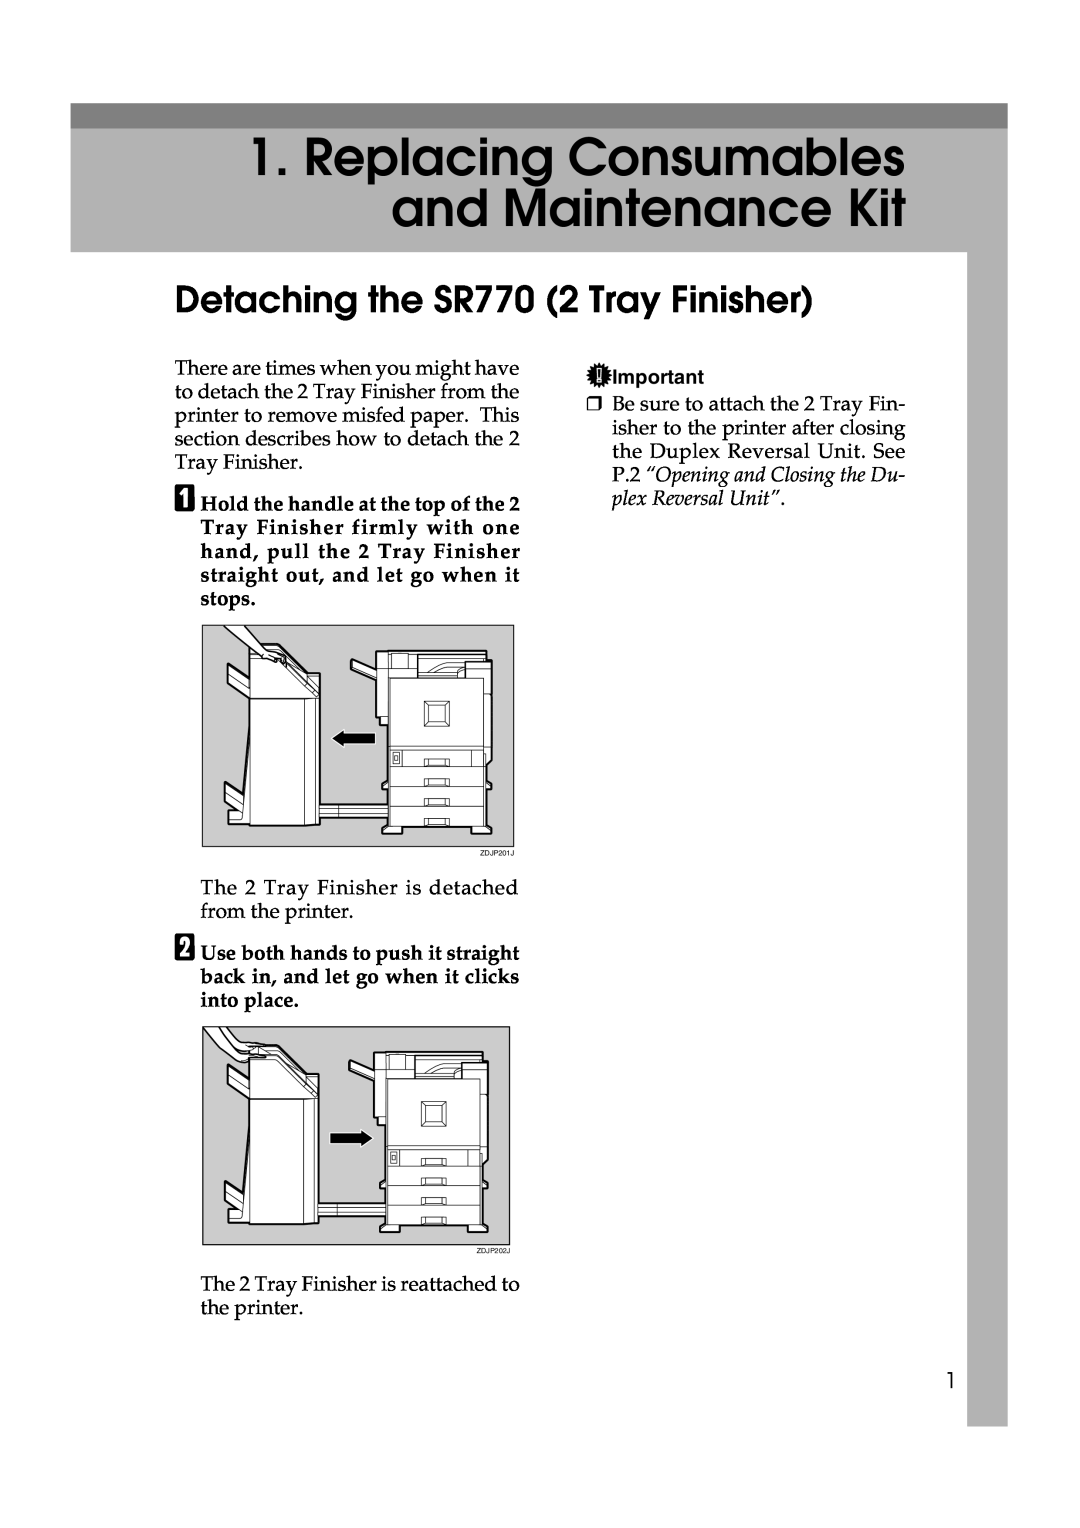 Savin SLP38C manual Replacing Consumables and Maintenance Kit, Detaching the SR770 2 Tray Finisher 